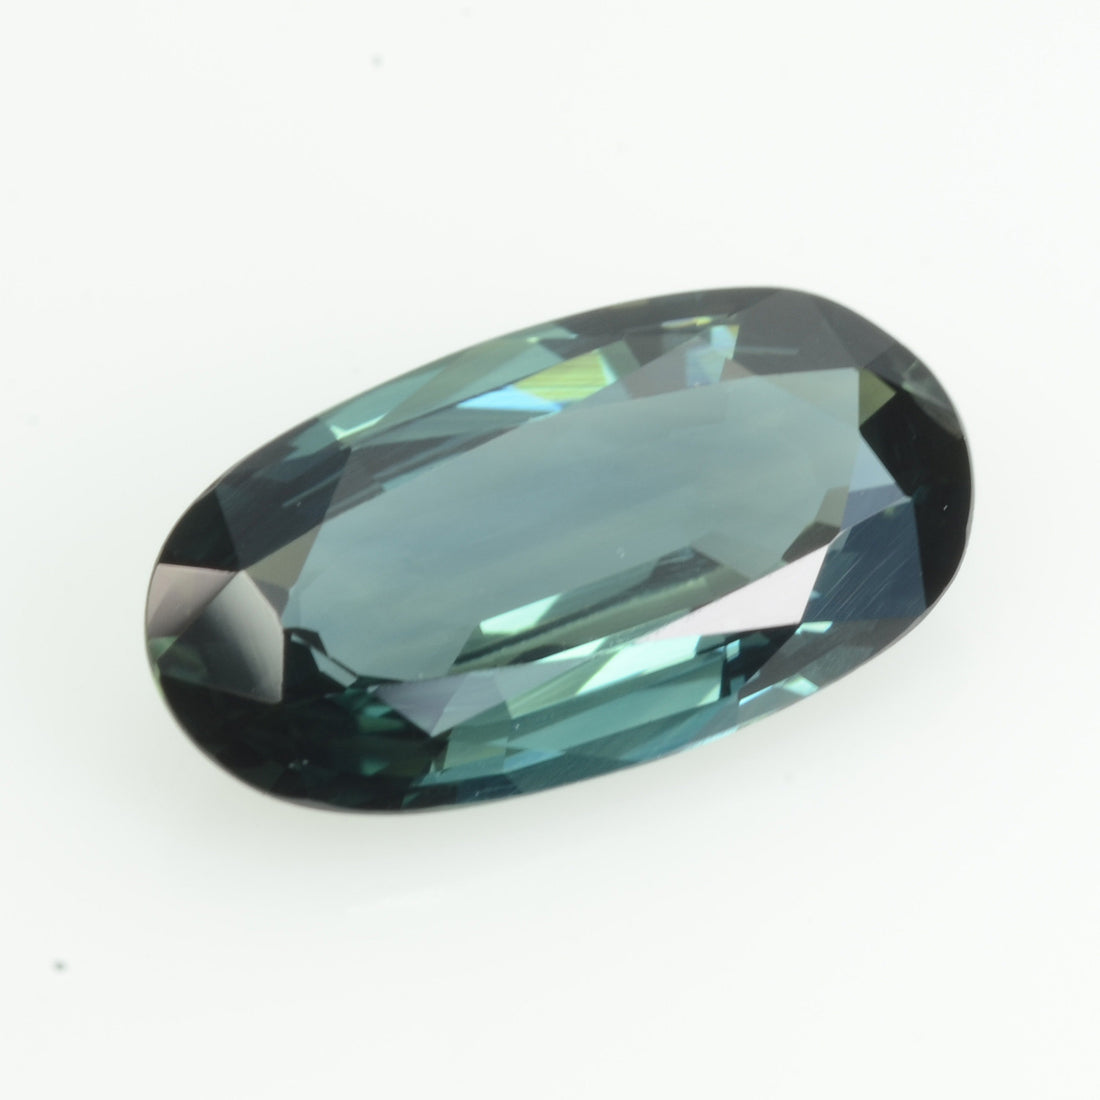 1.41 cts Natural Teal Blue Sapphire Loose Gemstone Oval Cut - Thai Gems Export Ltd.